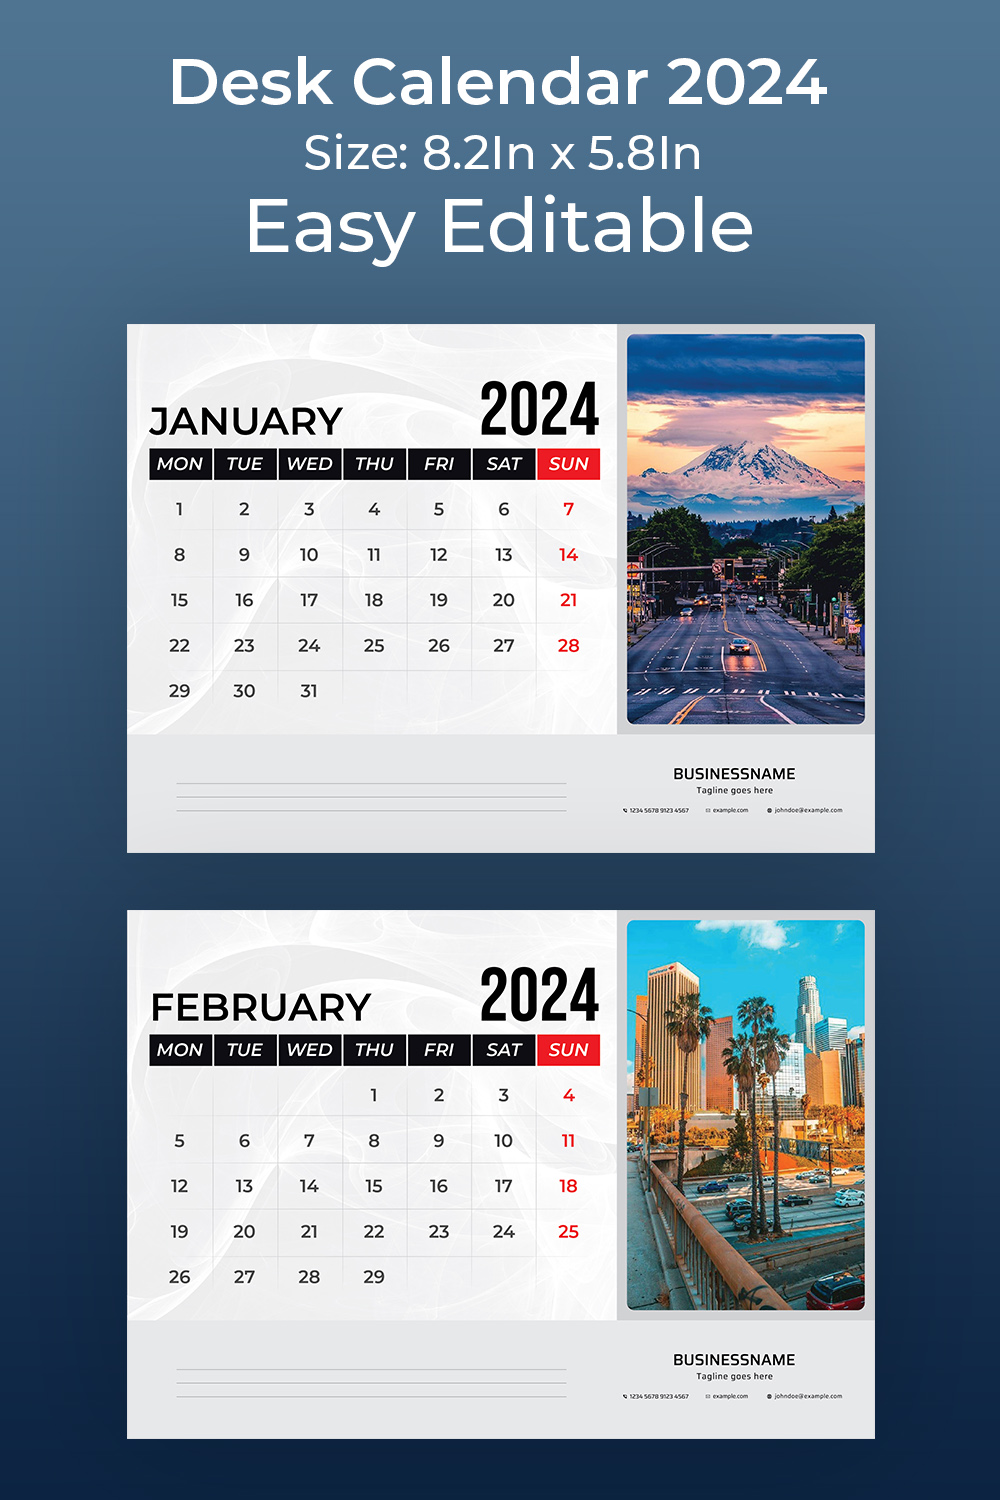 desk calendar 2024 pinterest preview image.